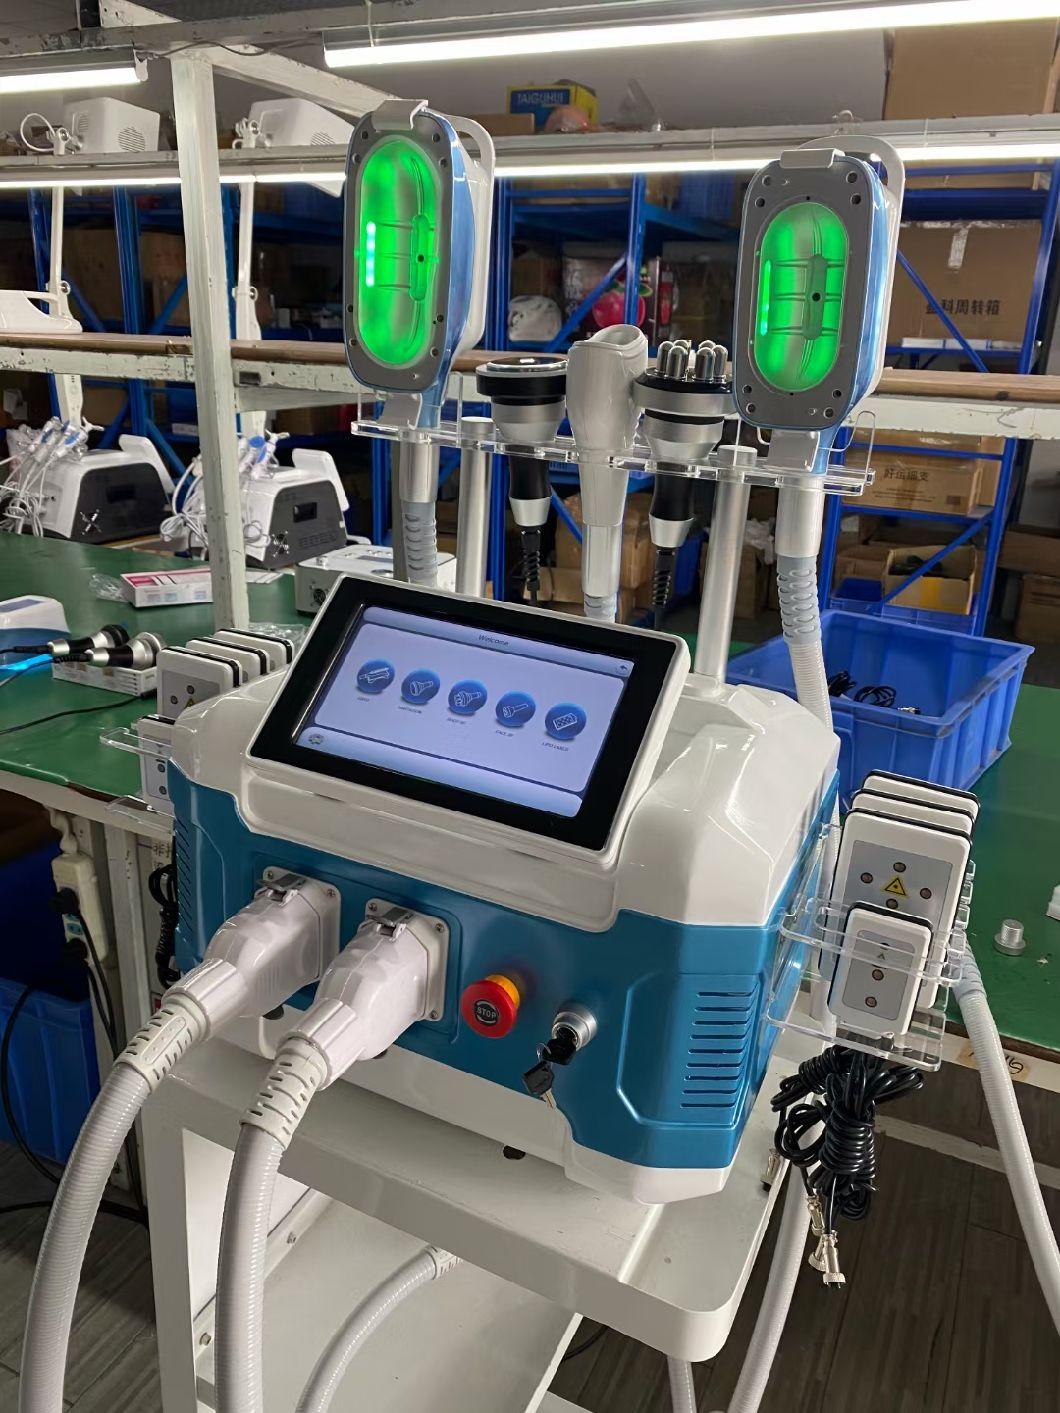 China Manufacturer Cryolipolysis Fat Freezing Machine for Sale